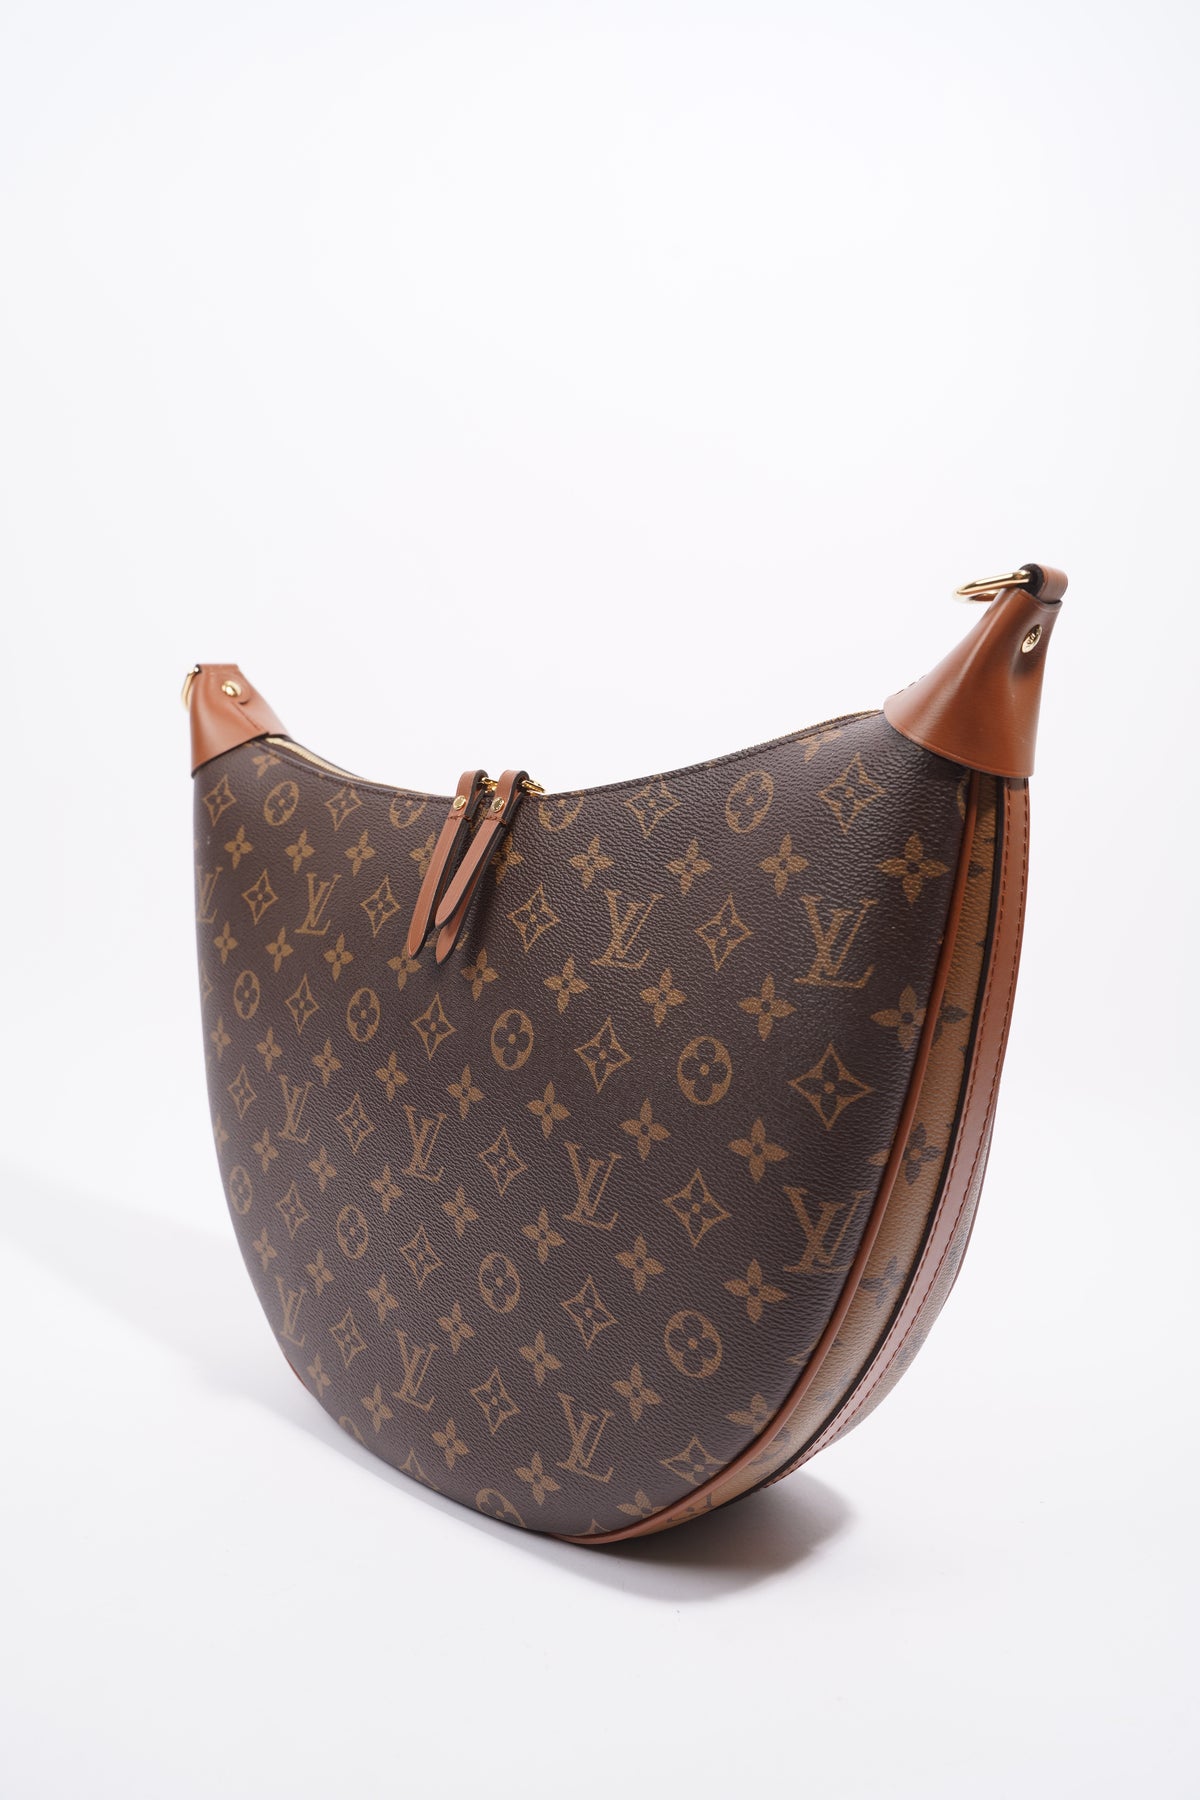 Loop Hobo Monogram - WOMEN - Handbags, LOUIS VUITTON ®